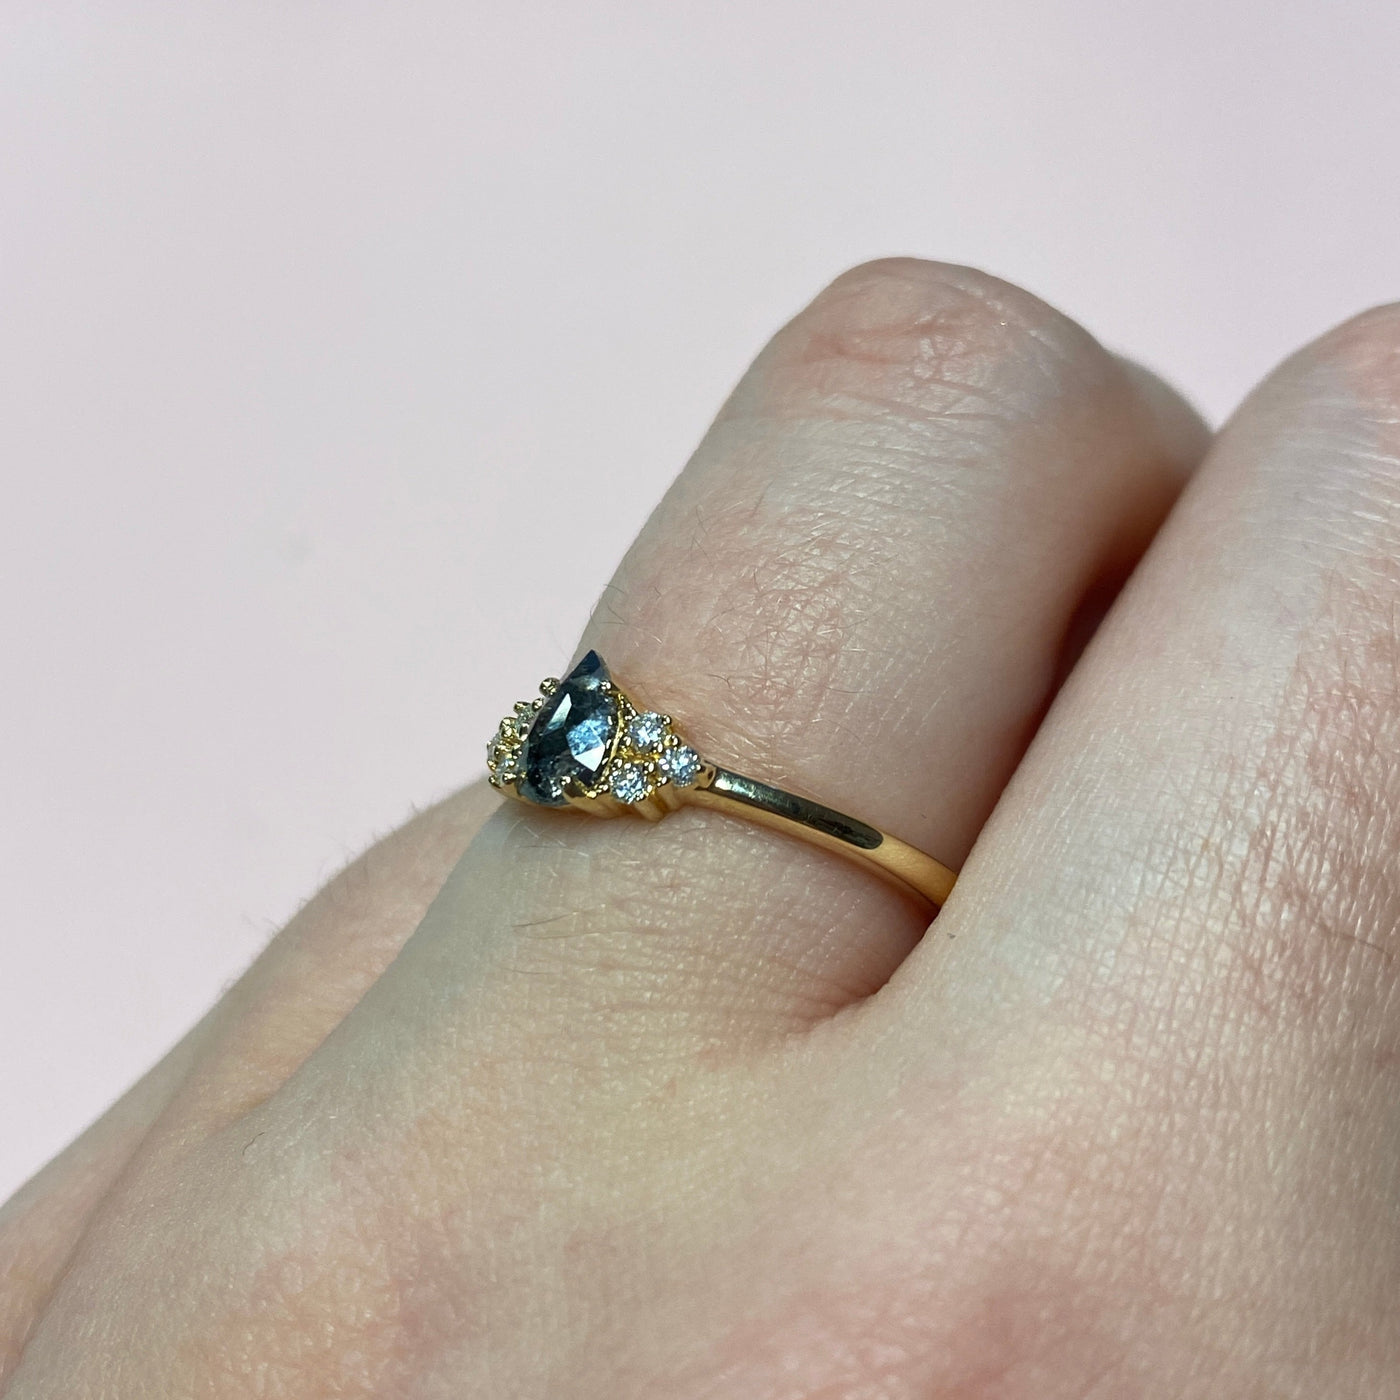 Henrietta - Teardrop/Pear Cut Salt and Pepper Diamond Engagement Ring With White Diamond Side Stones - Custom Made-to-Order Design